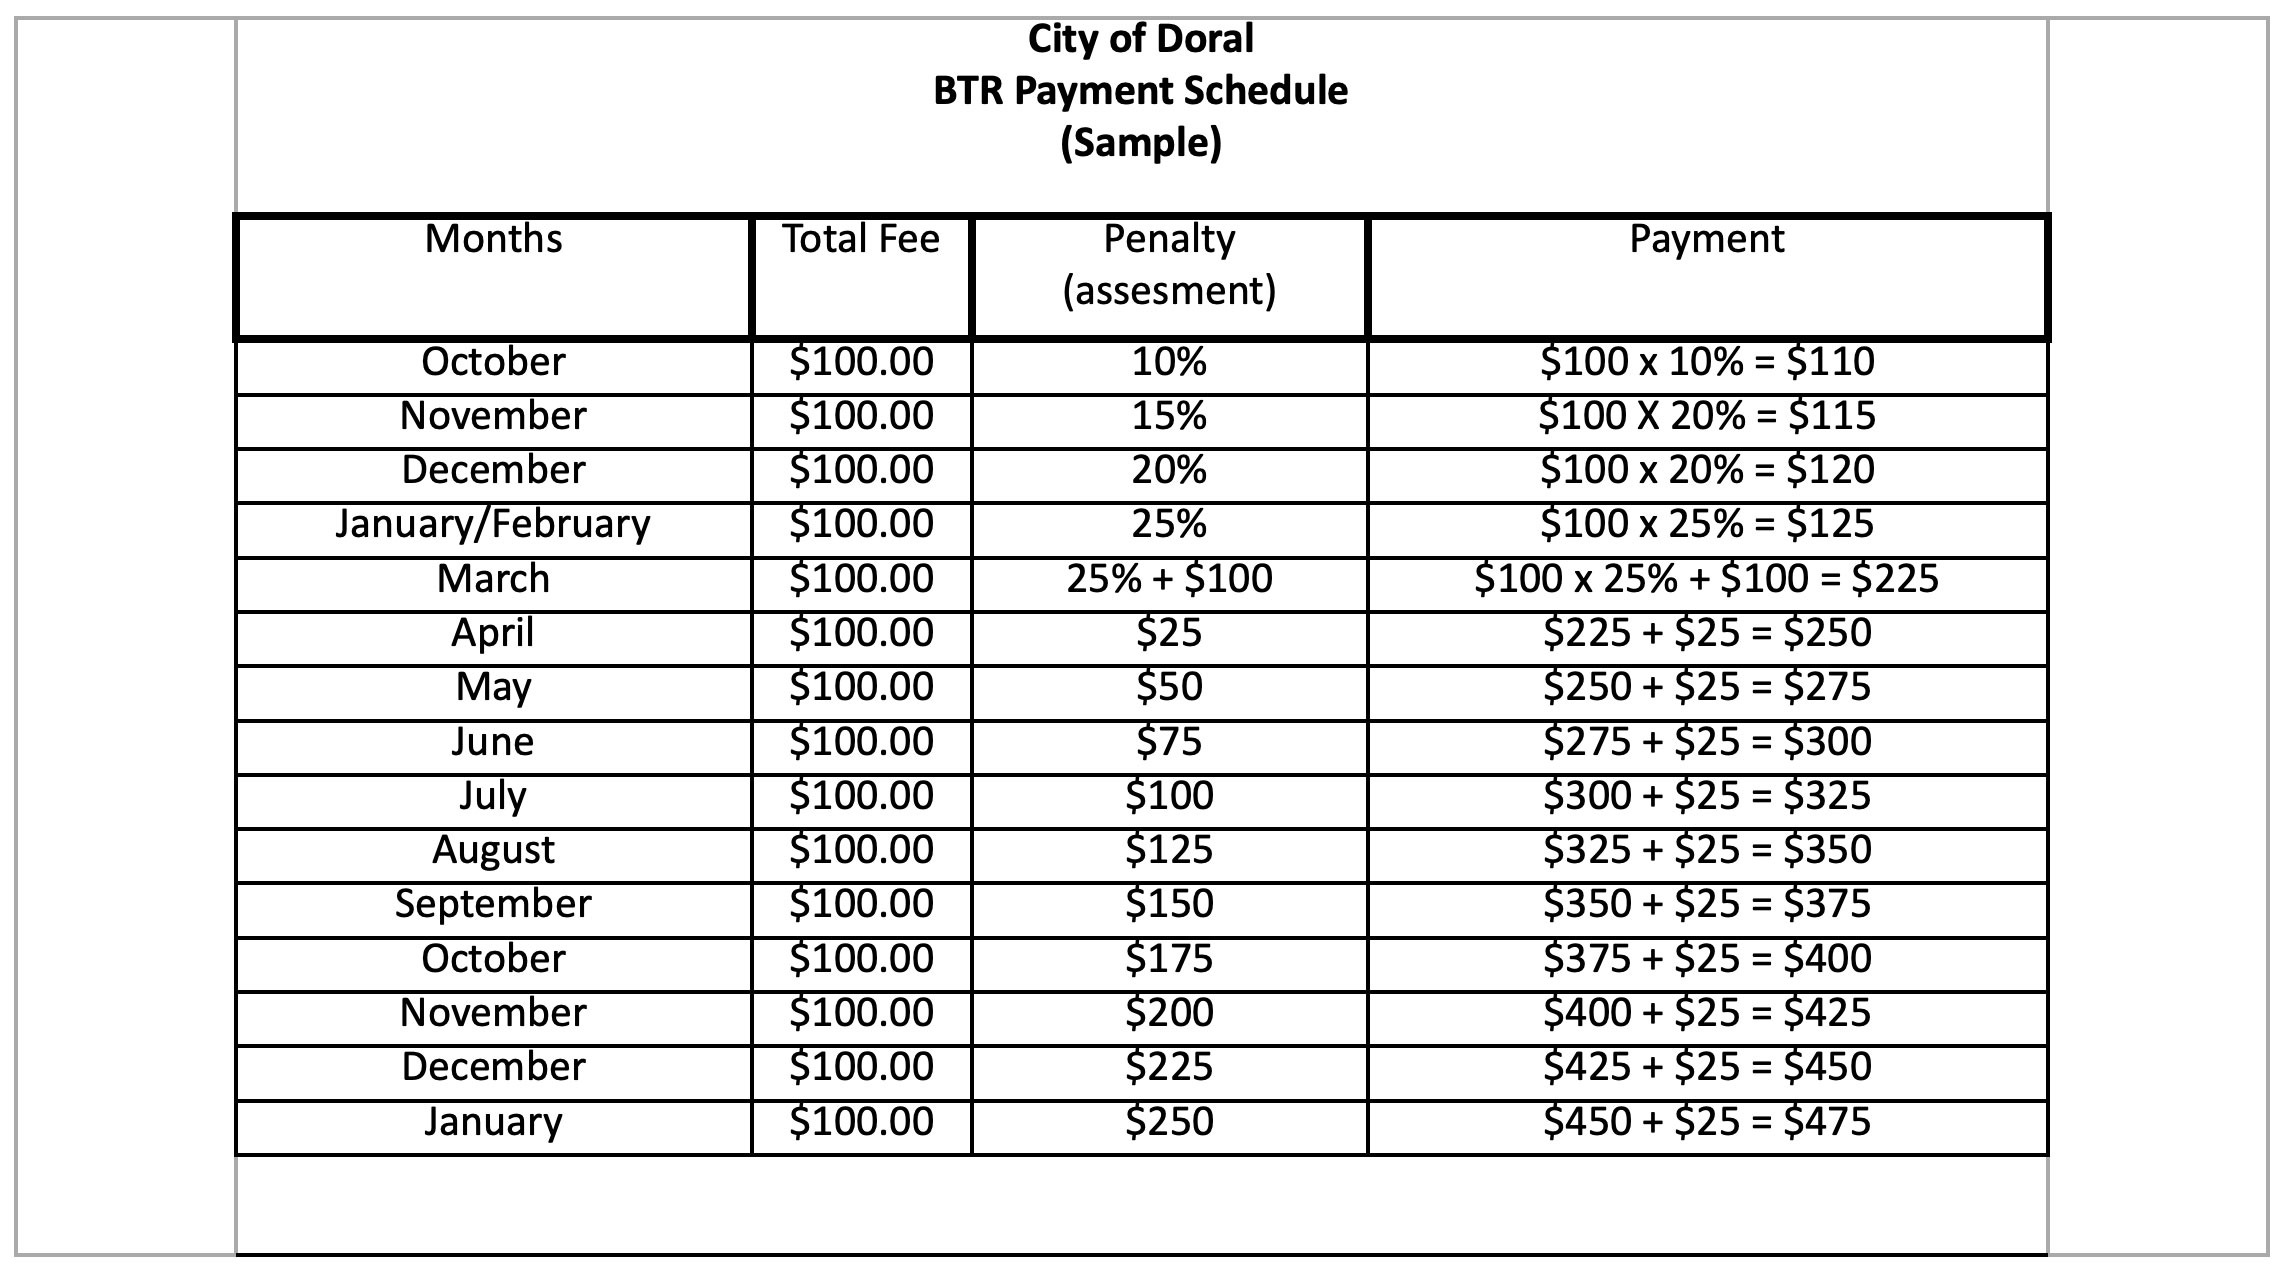 BTR Payment Schedule Sample